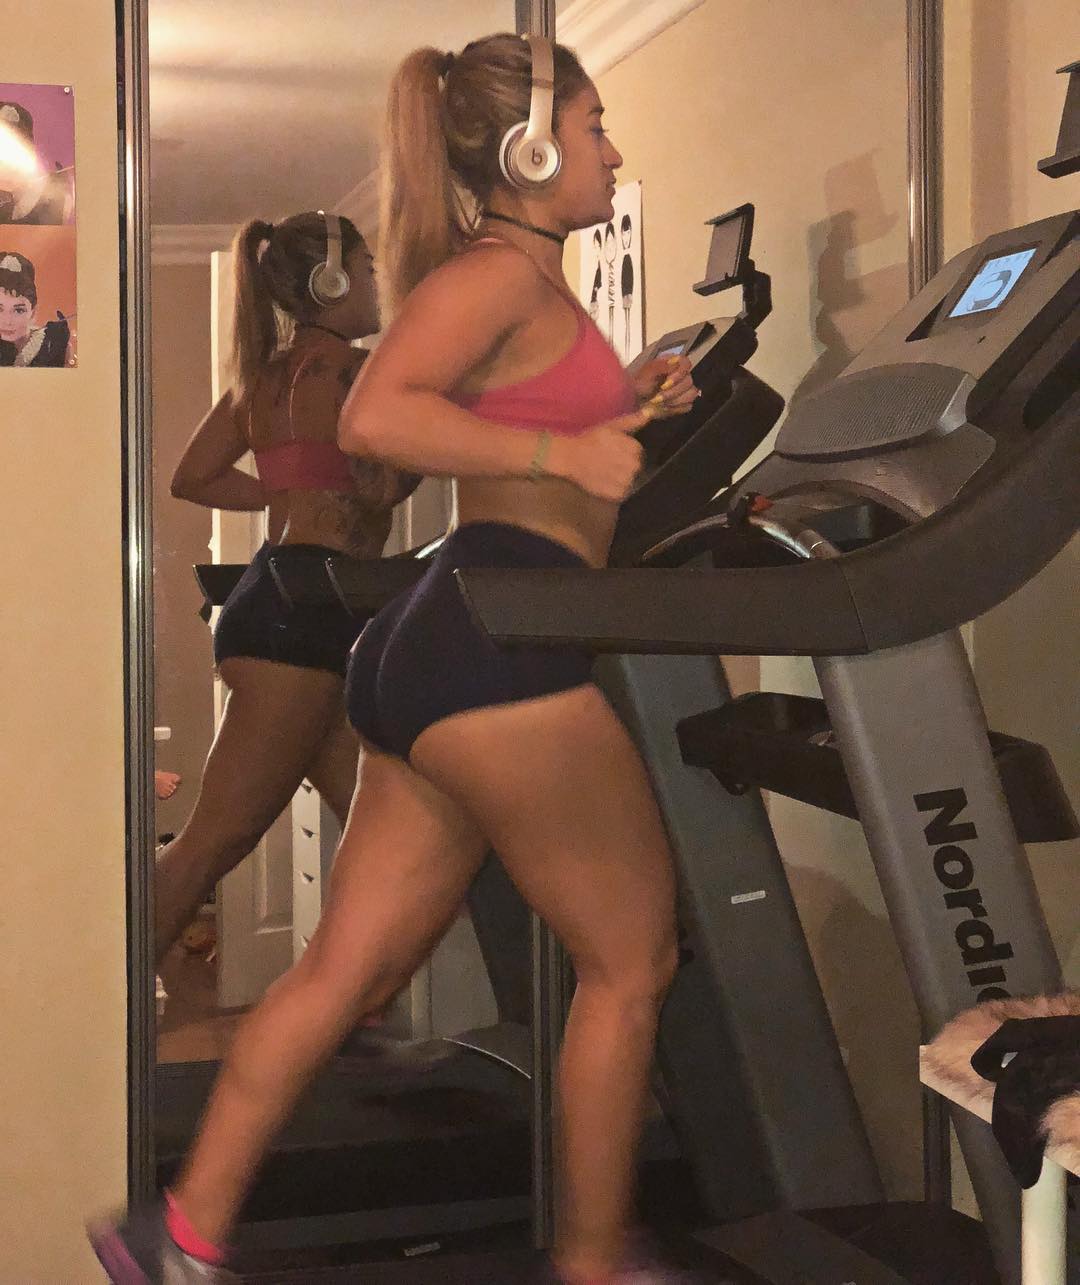 Running on a treadmill barefoot